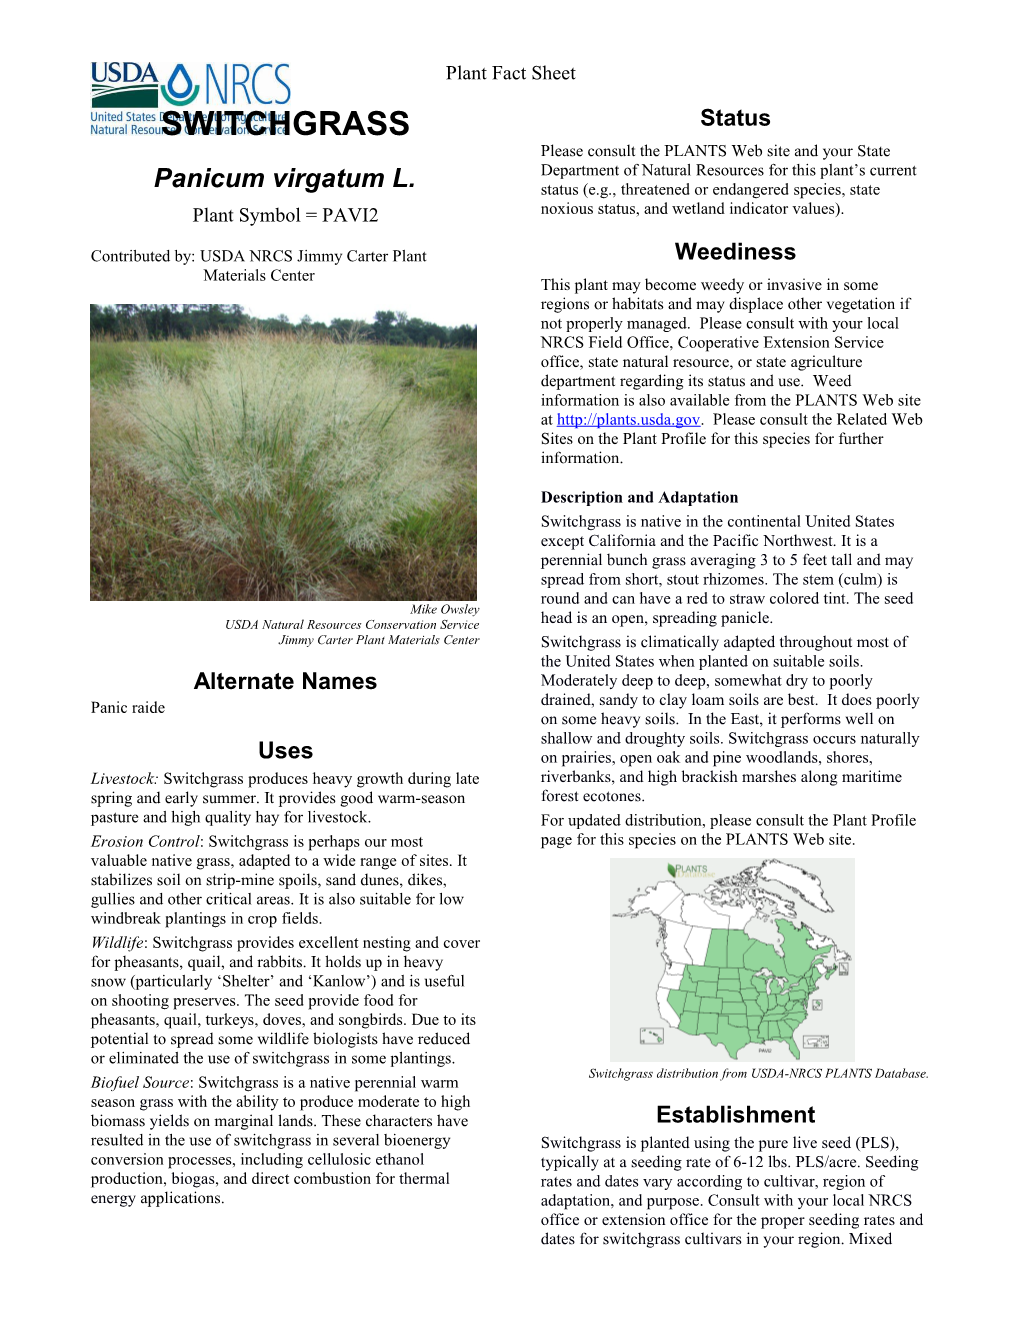 Switchgrass, Panicum Virgatum L .Plant Fact Sheet